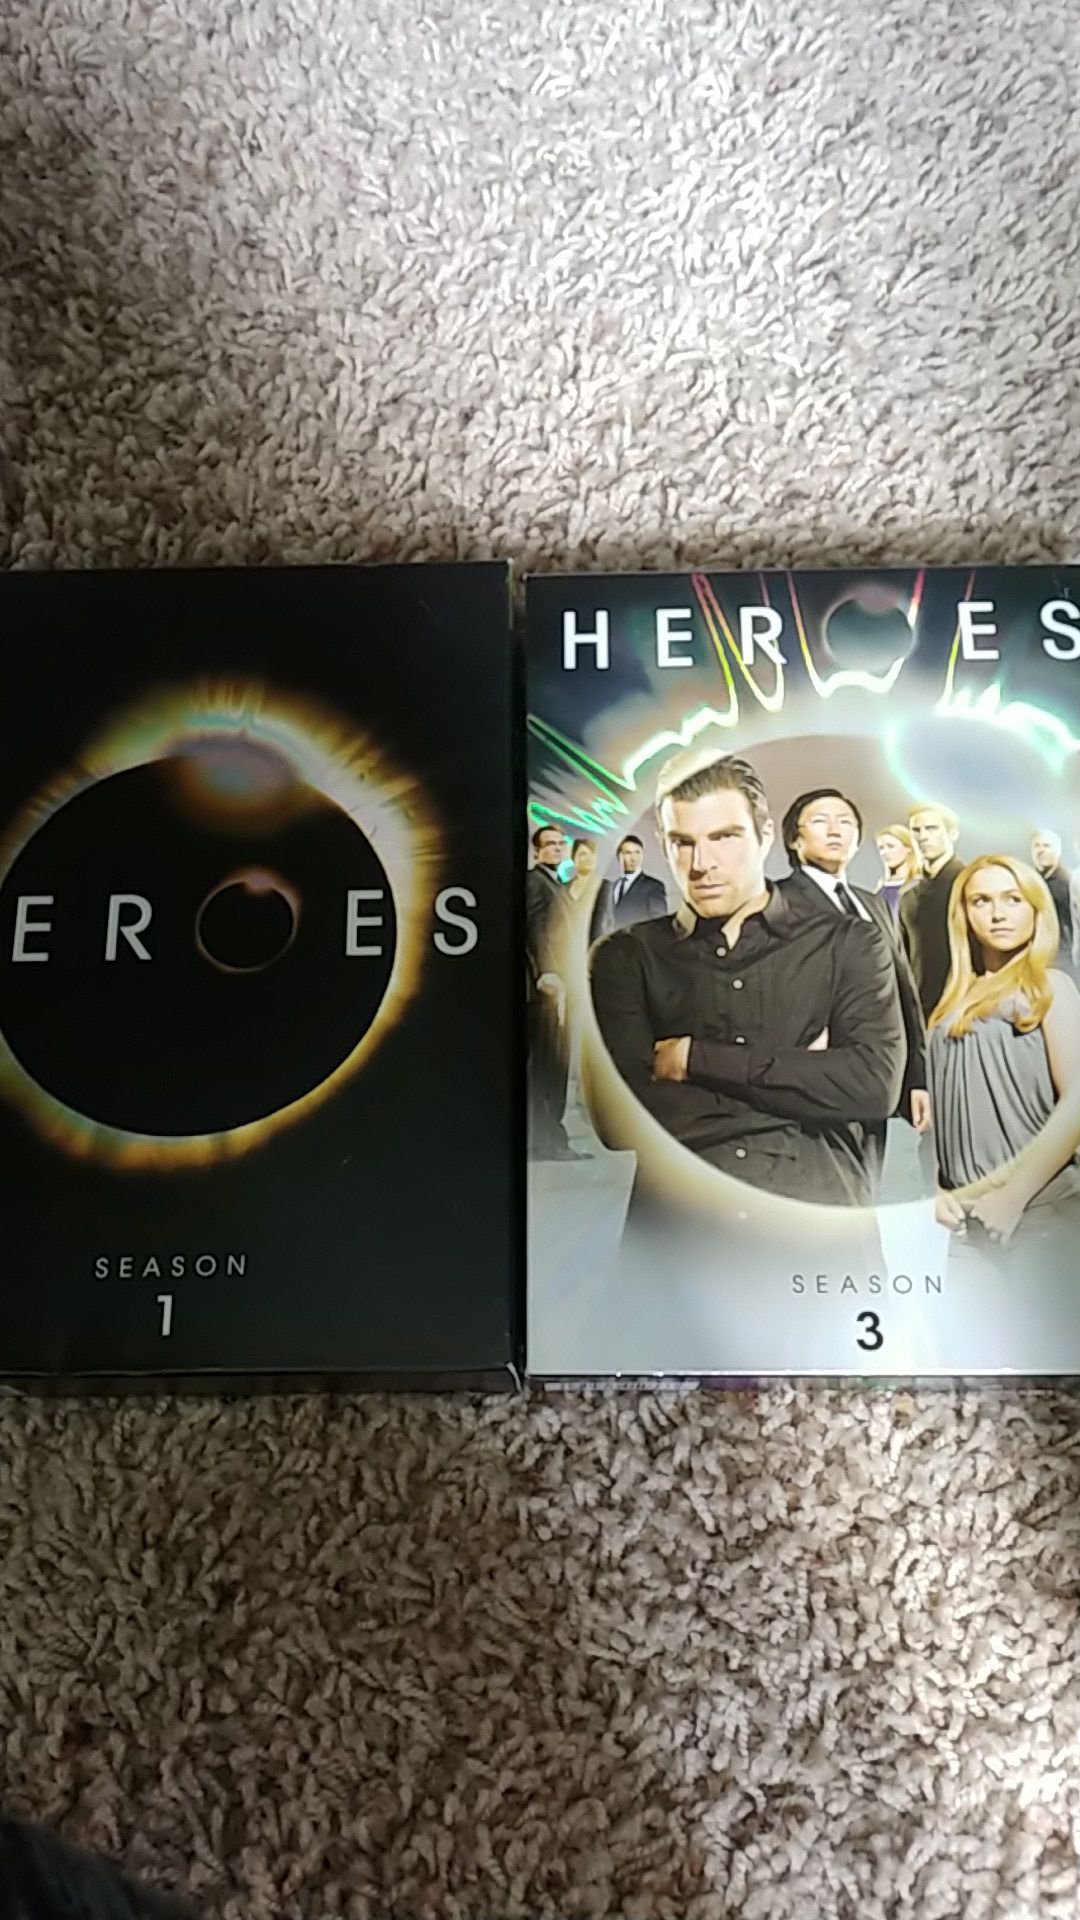 Heroes season 1 and 3